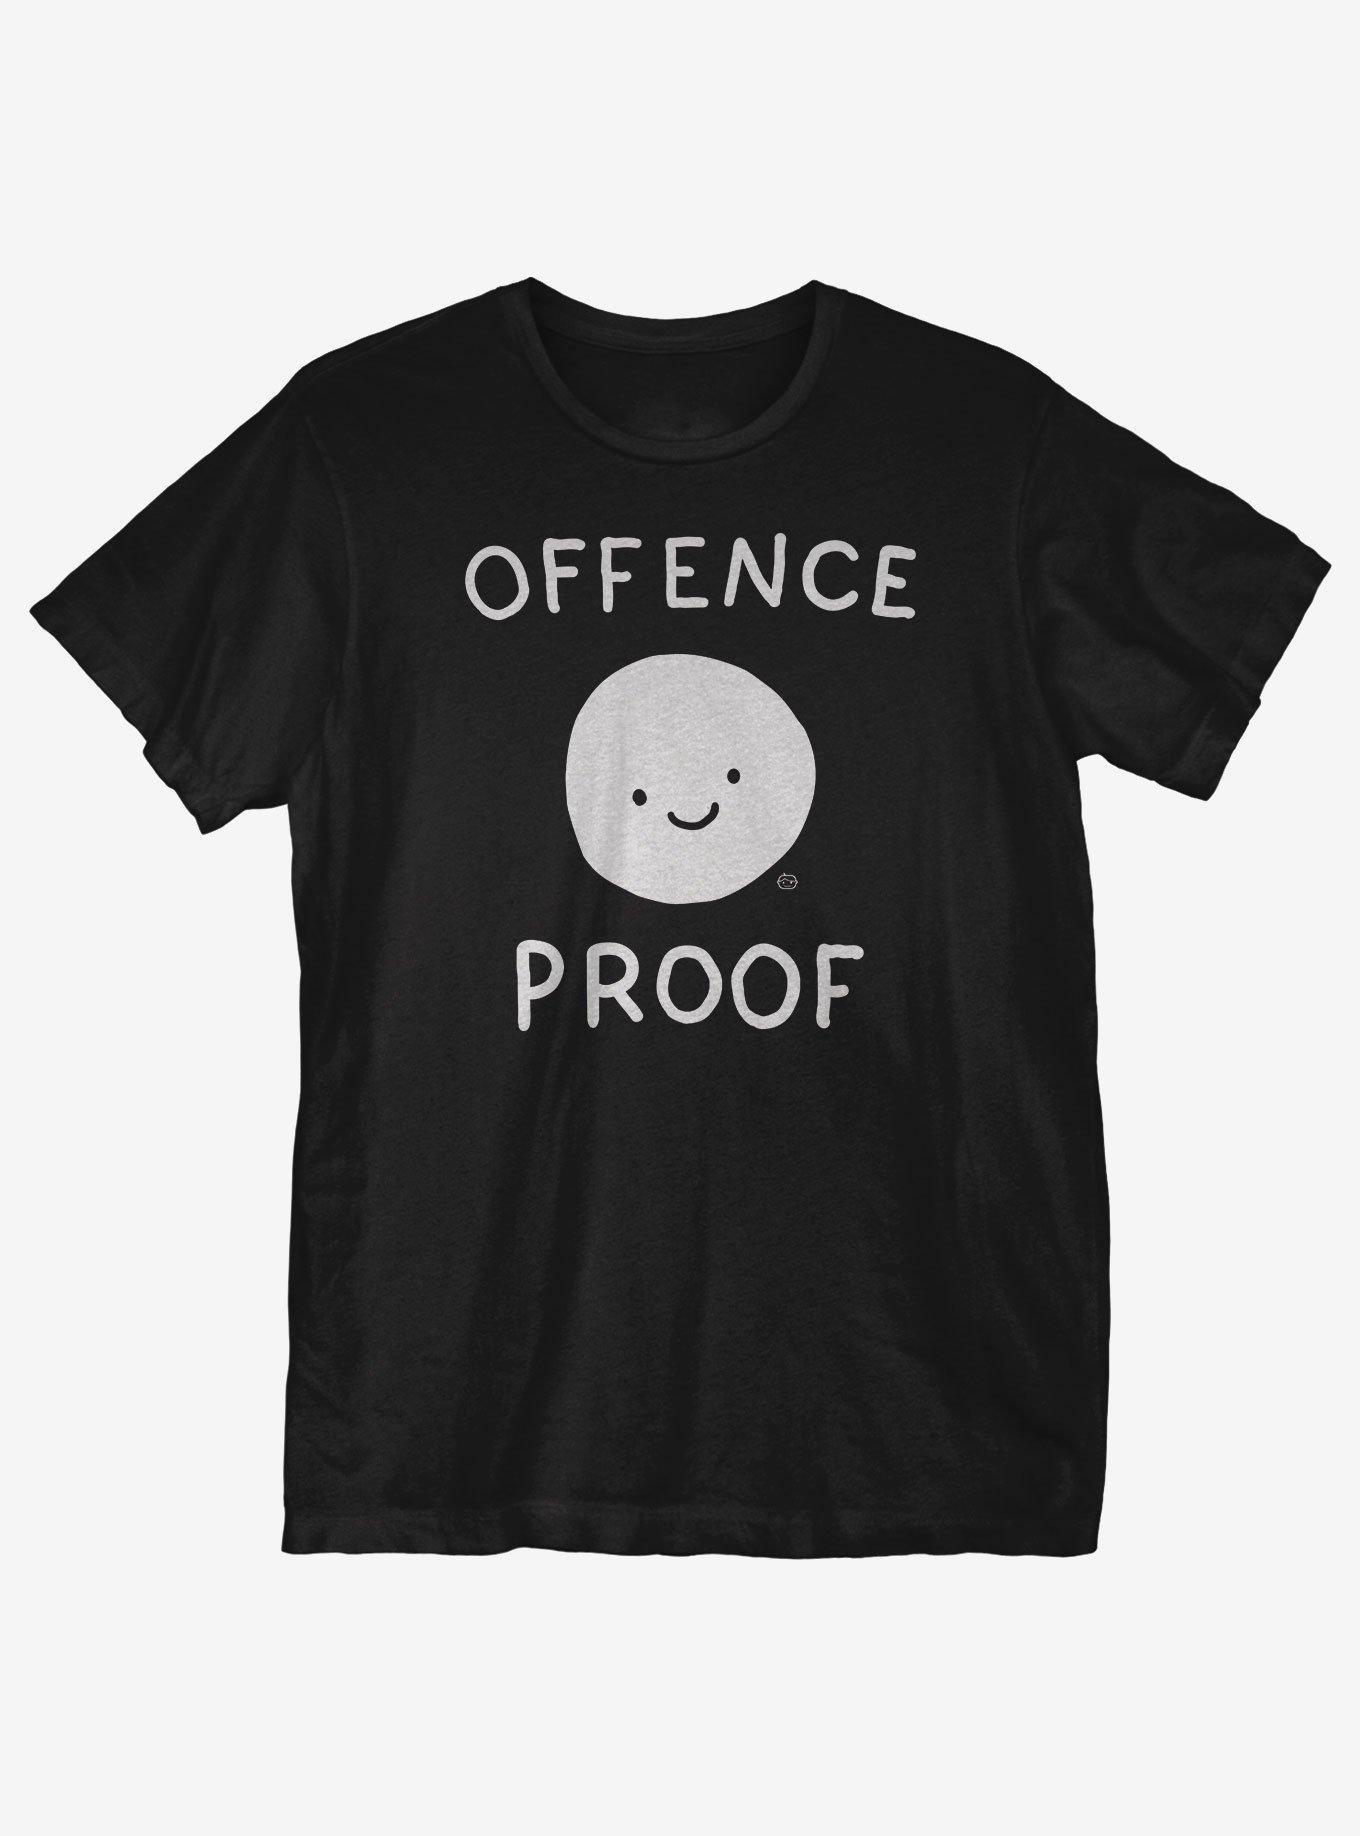 Offence Proof T-Shirt, BLACK, hi-res